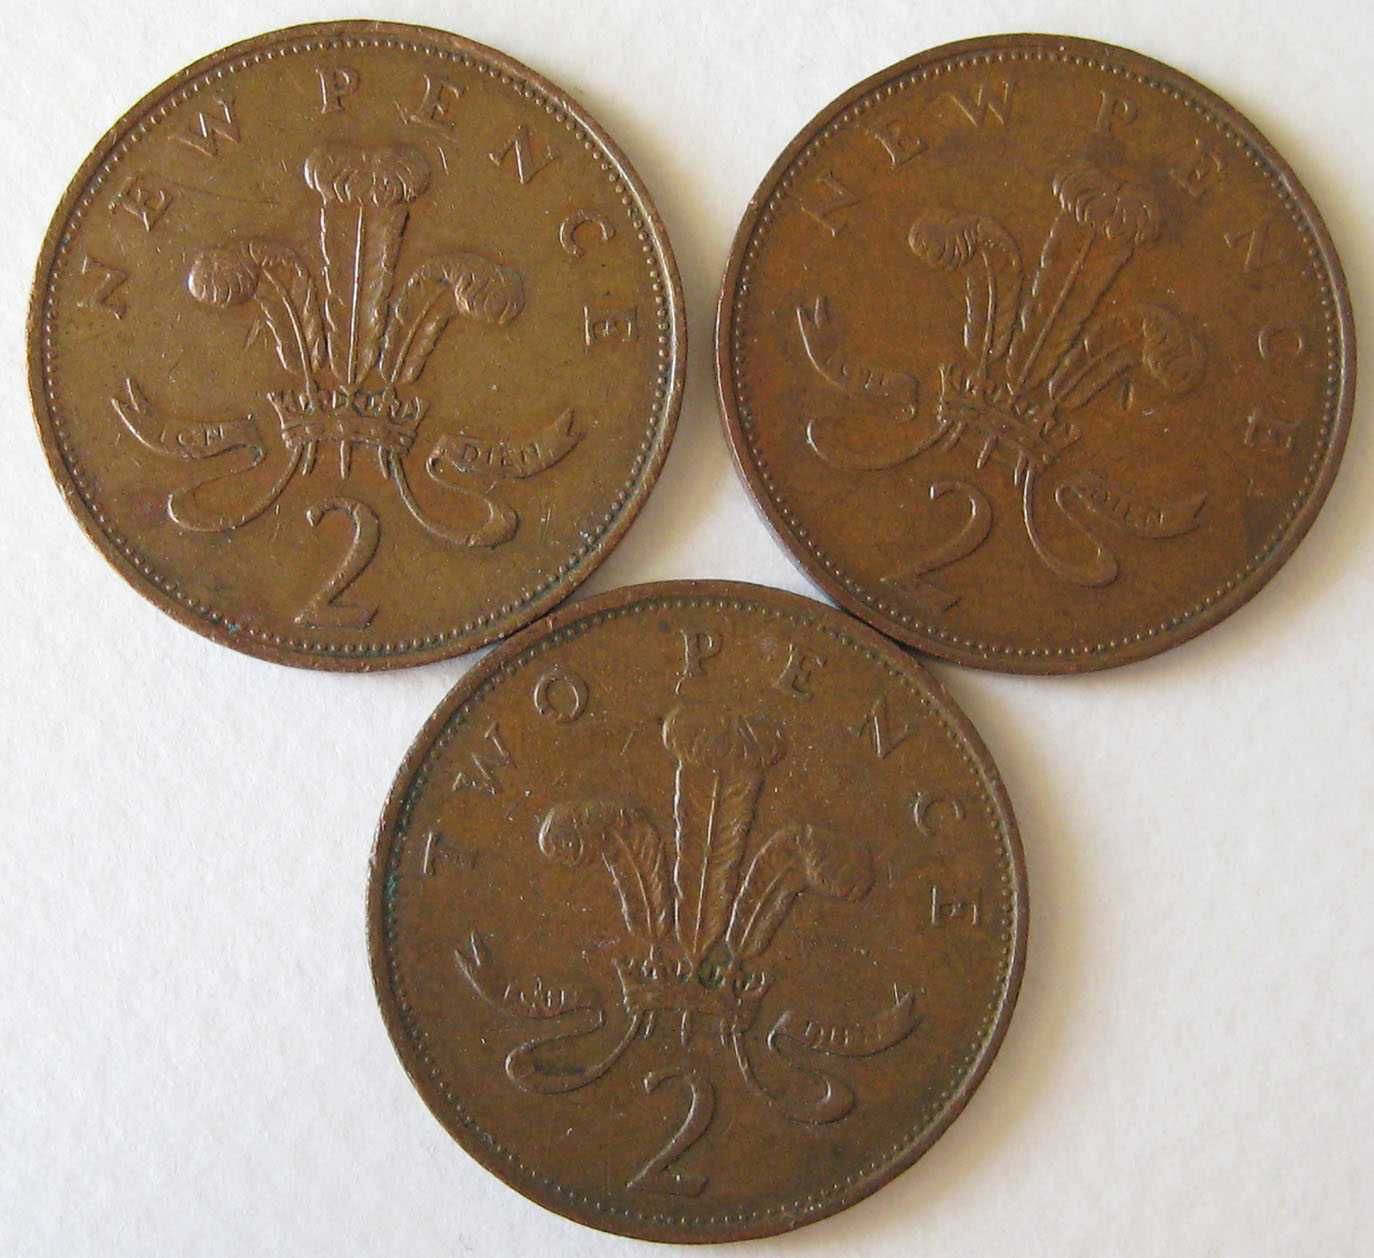 New Penny New Pence 1 2 10 Монети Англія